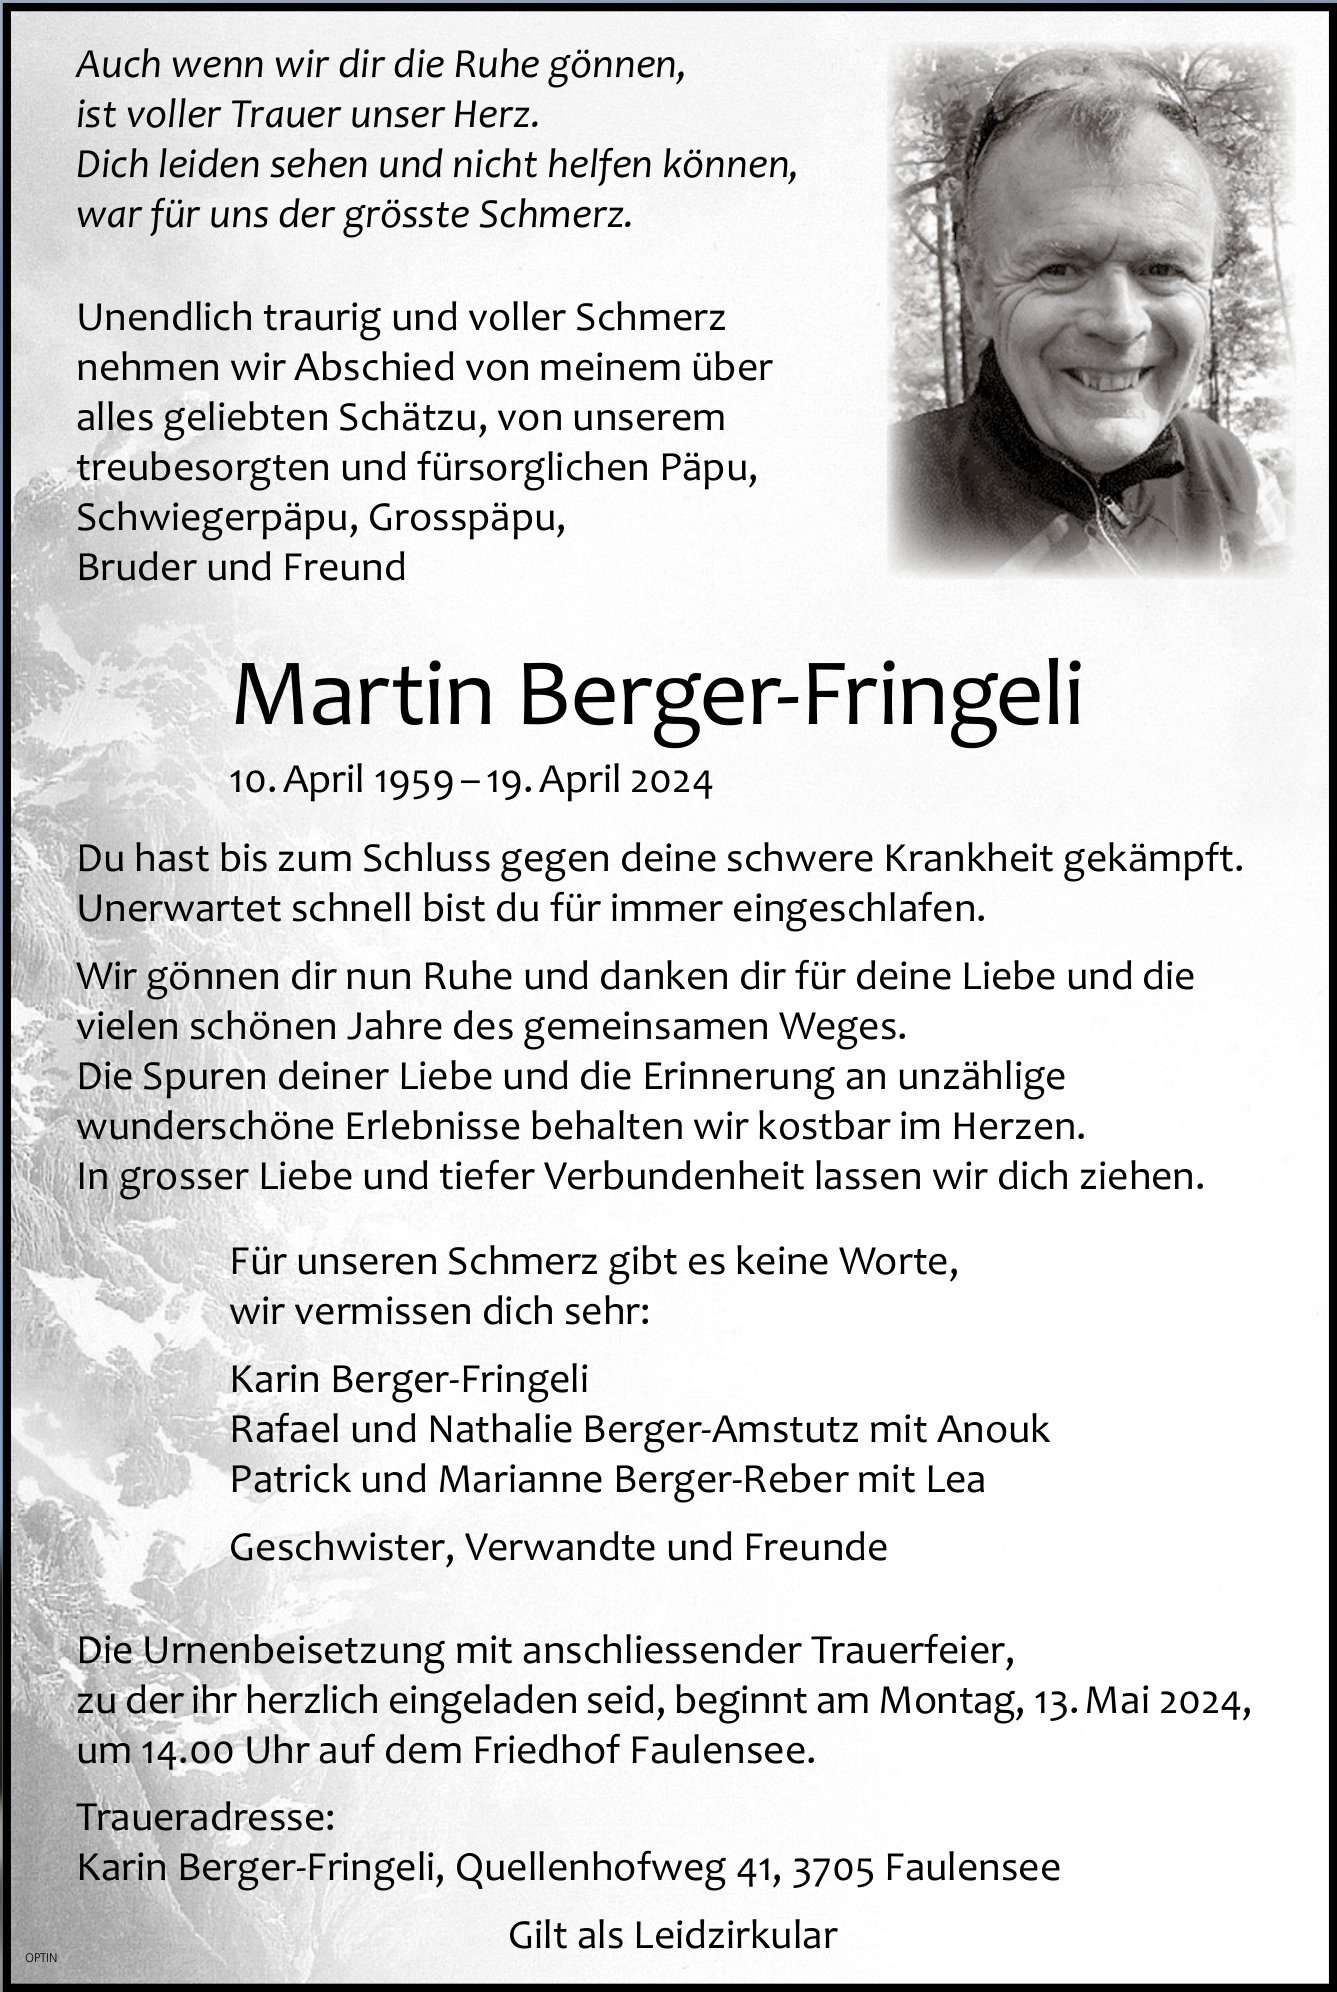 Martin Berger-Fringeli, April 2024 / TA